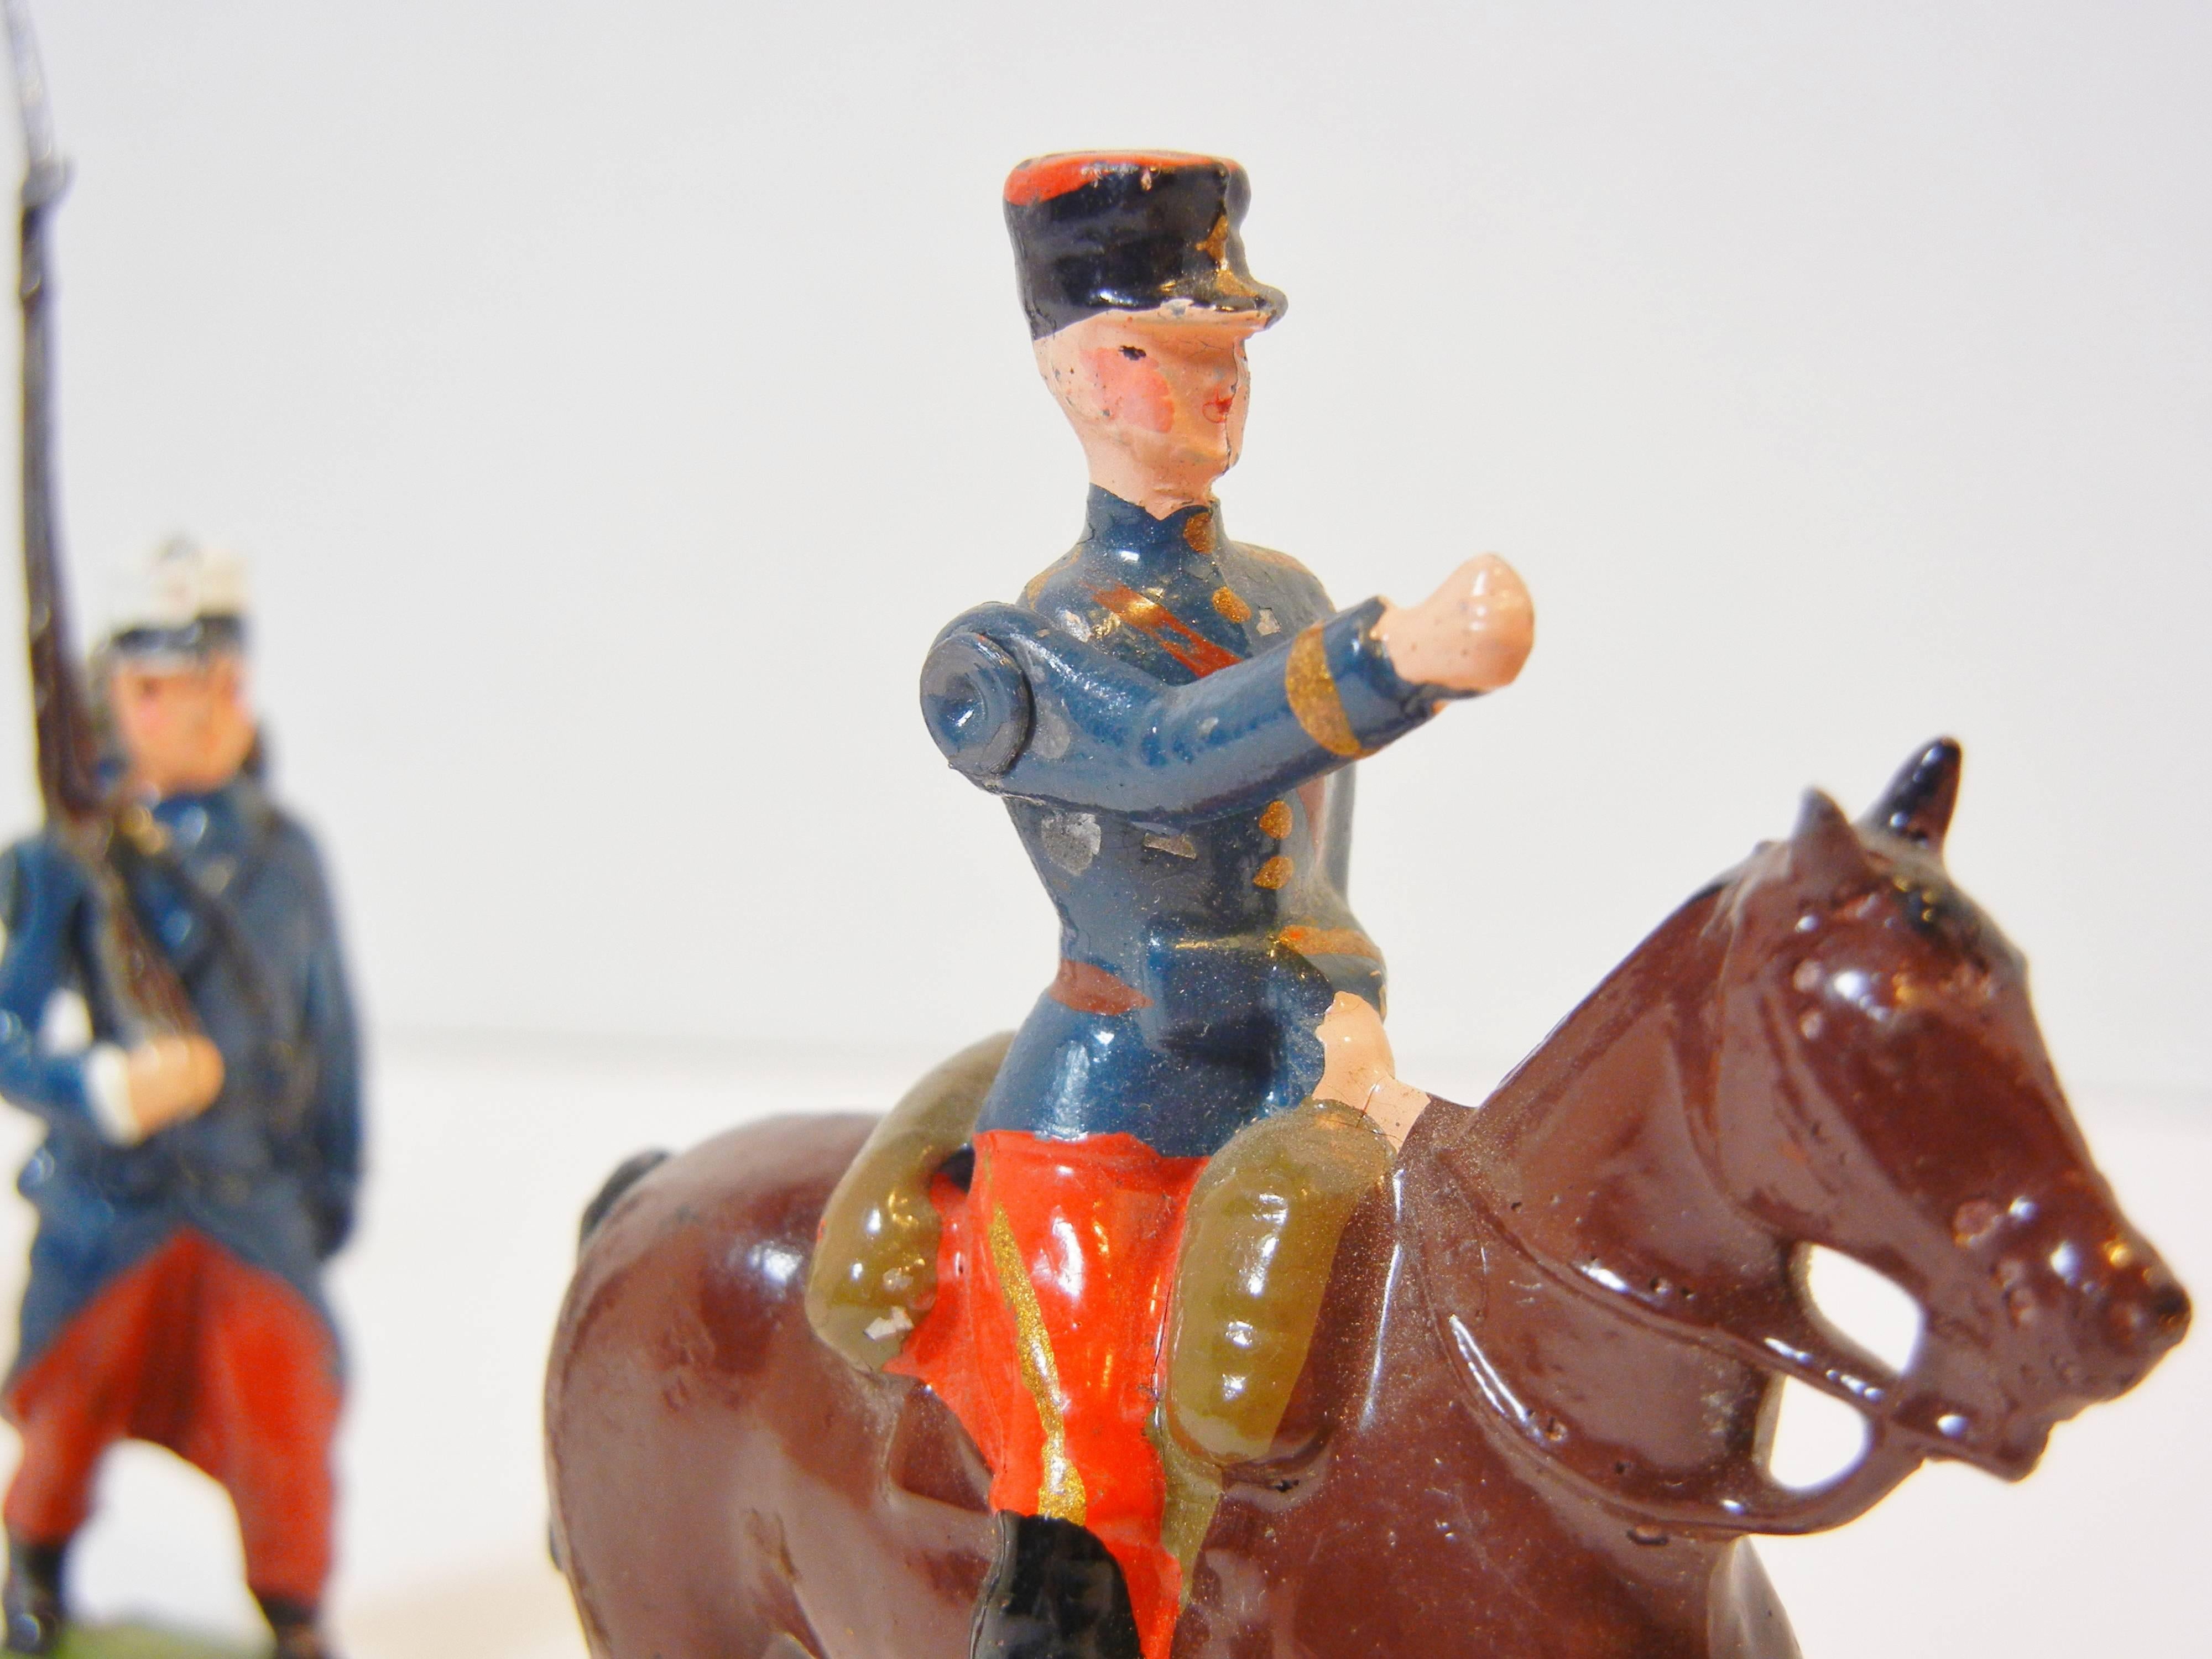 British French Foreign Legion, Vintage Toy Soldiers by W. Britain Ltd